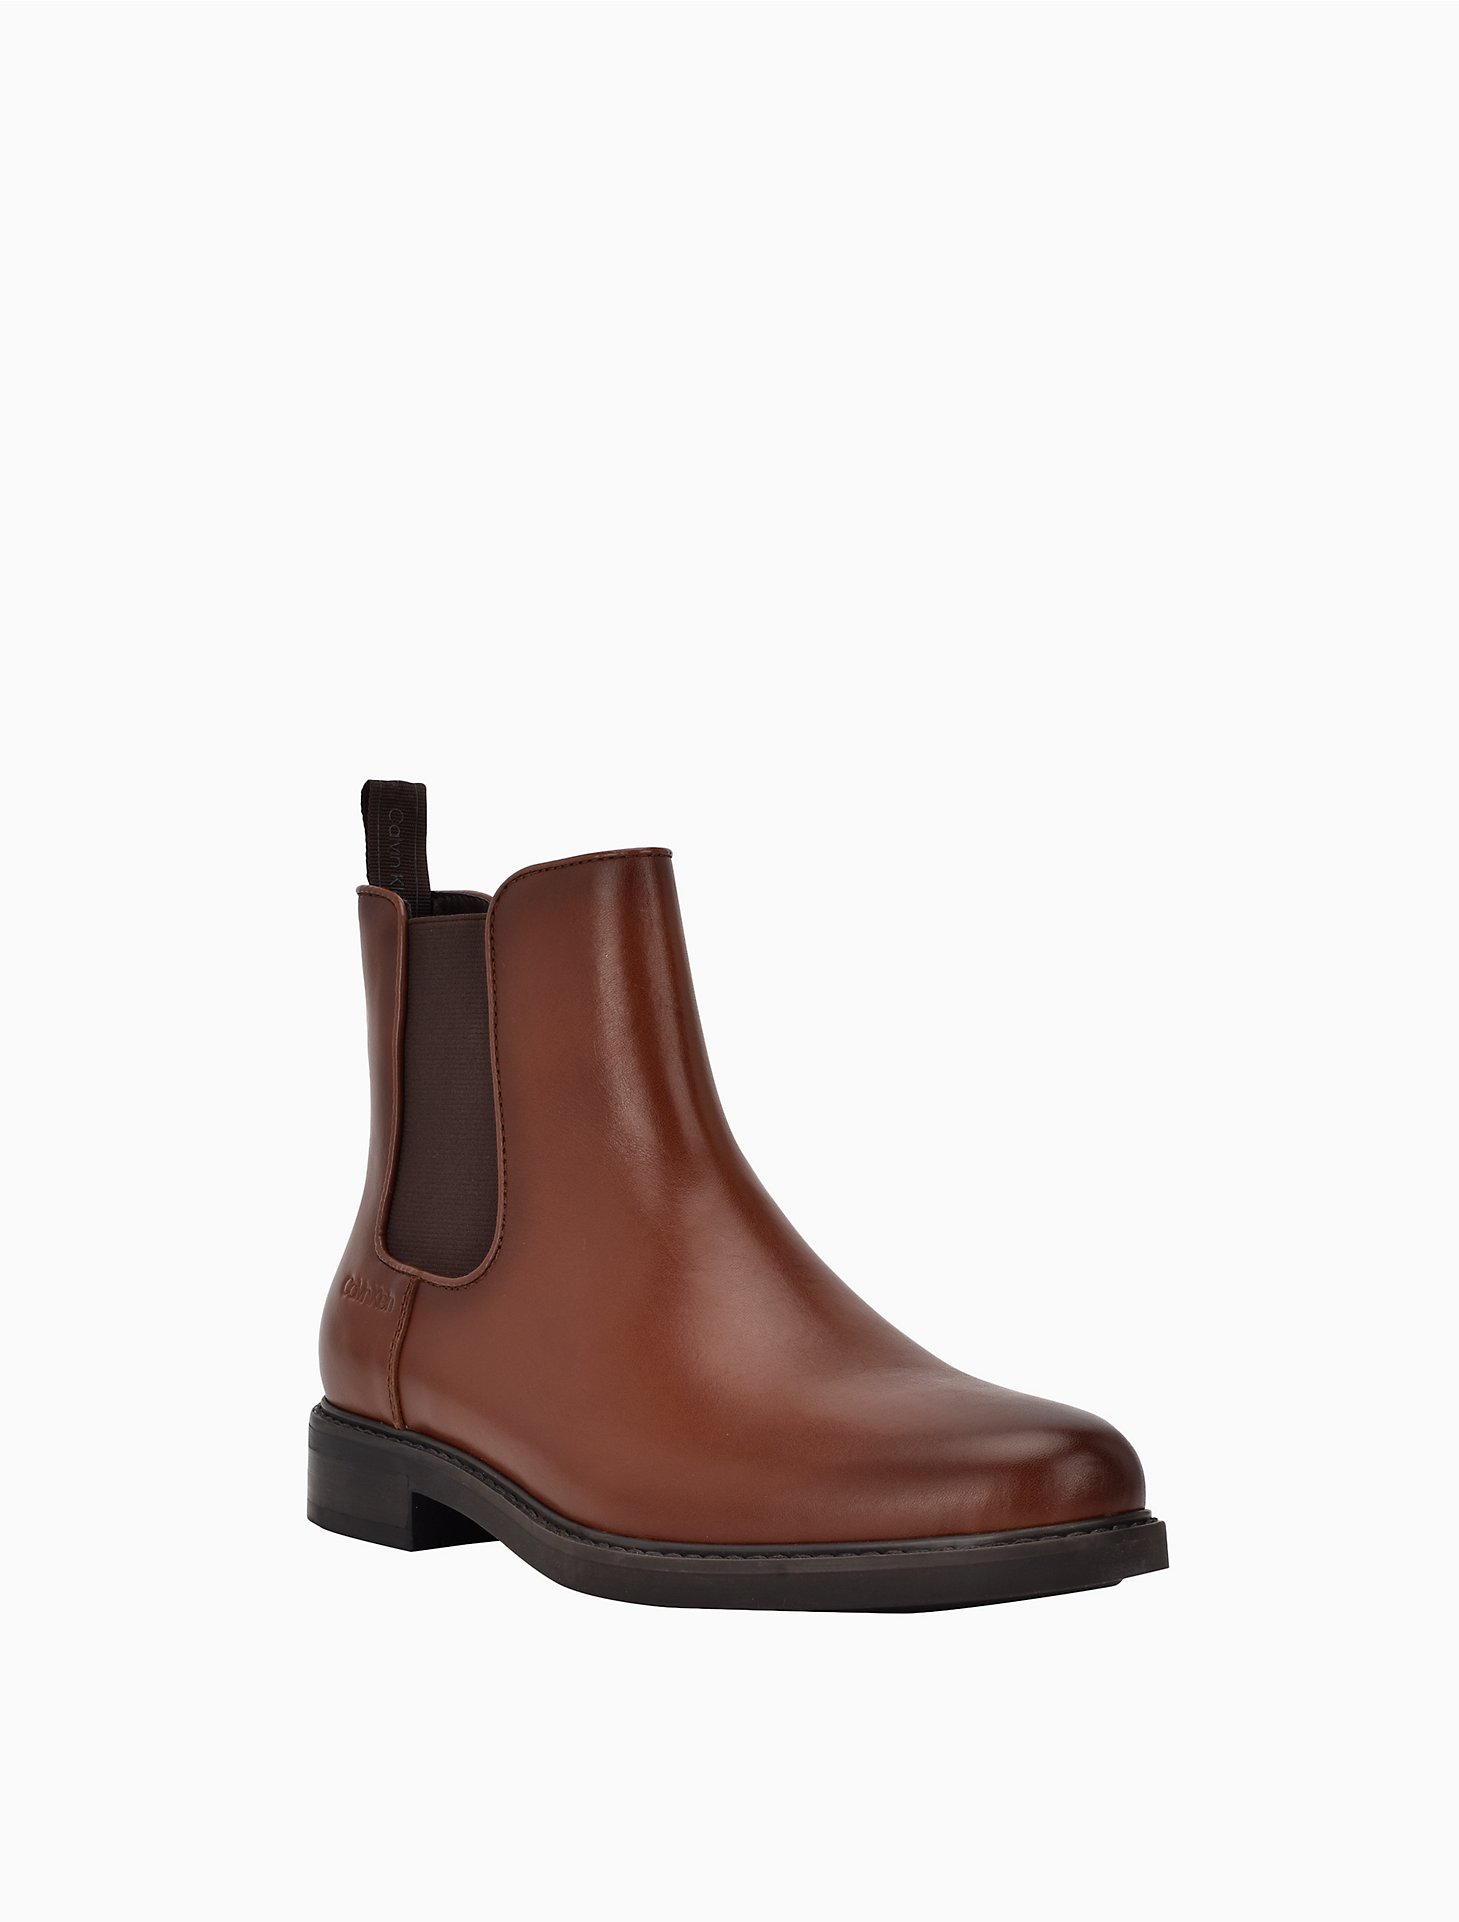 Descubrir 38+ imagen calvin klein brown leather boots